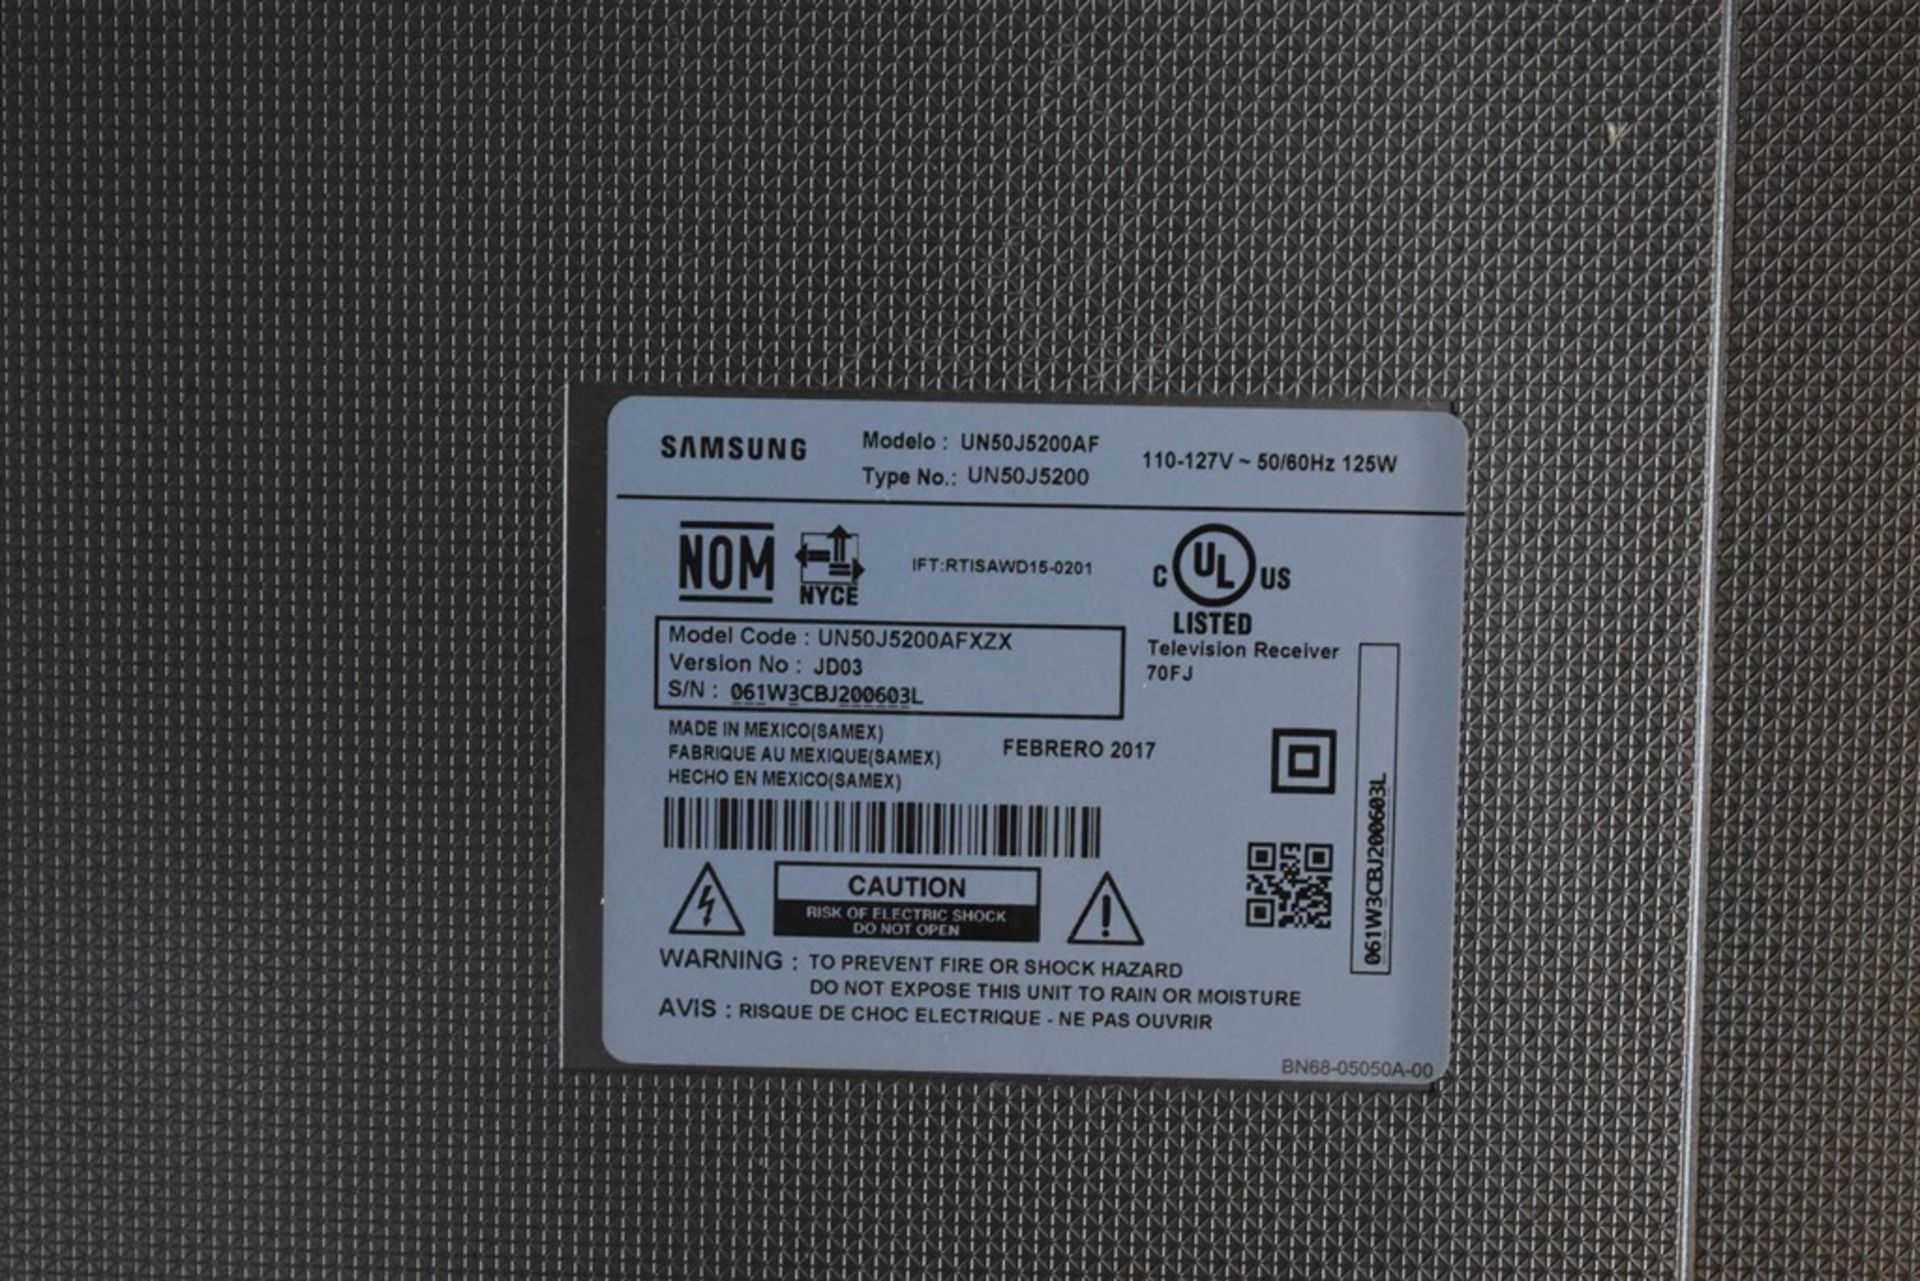 Pantalla Full HD de 50 pulgadas marca Samsung, Modelo: UN50J5200AF, Serie: 061W3CBJ200603L - Image 6 of 7